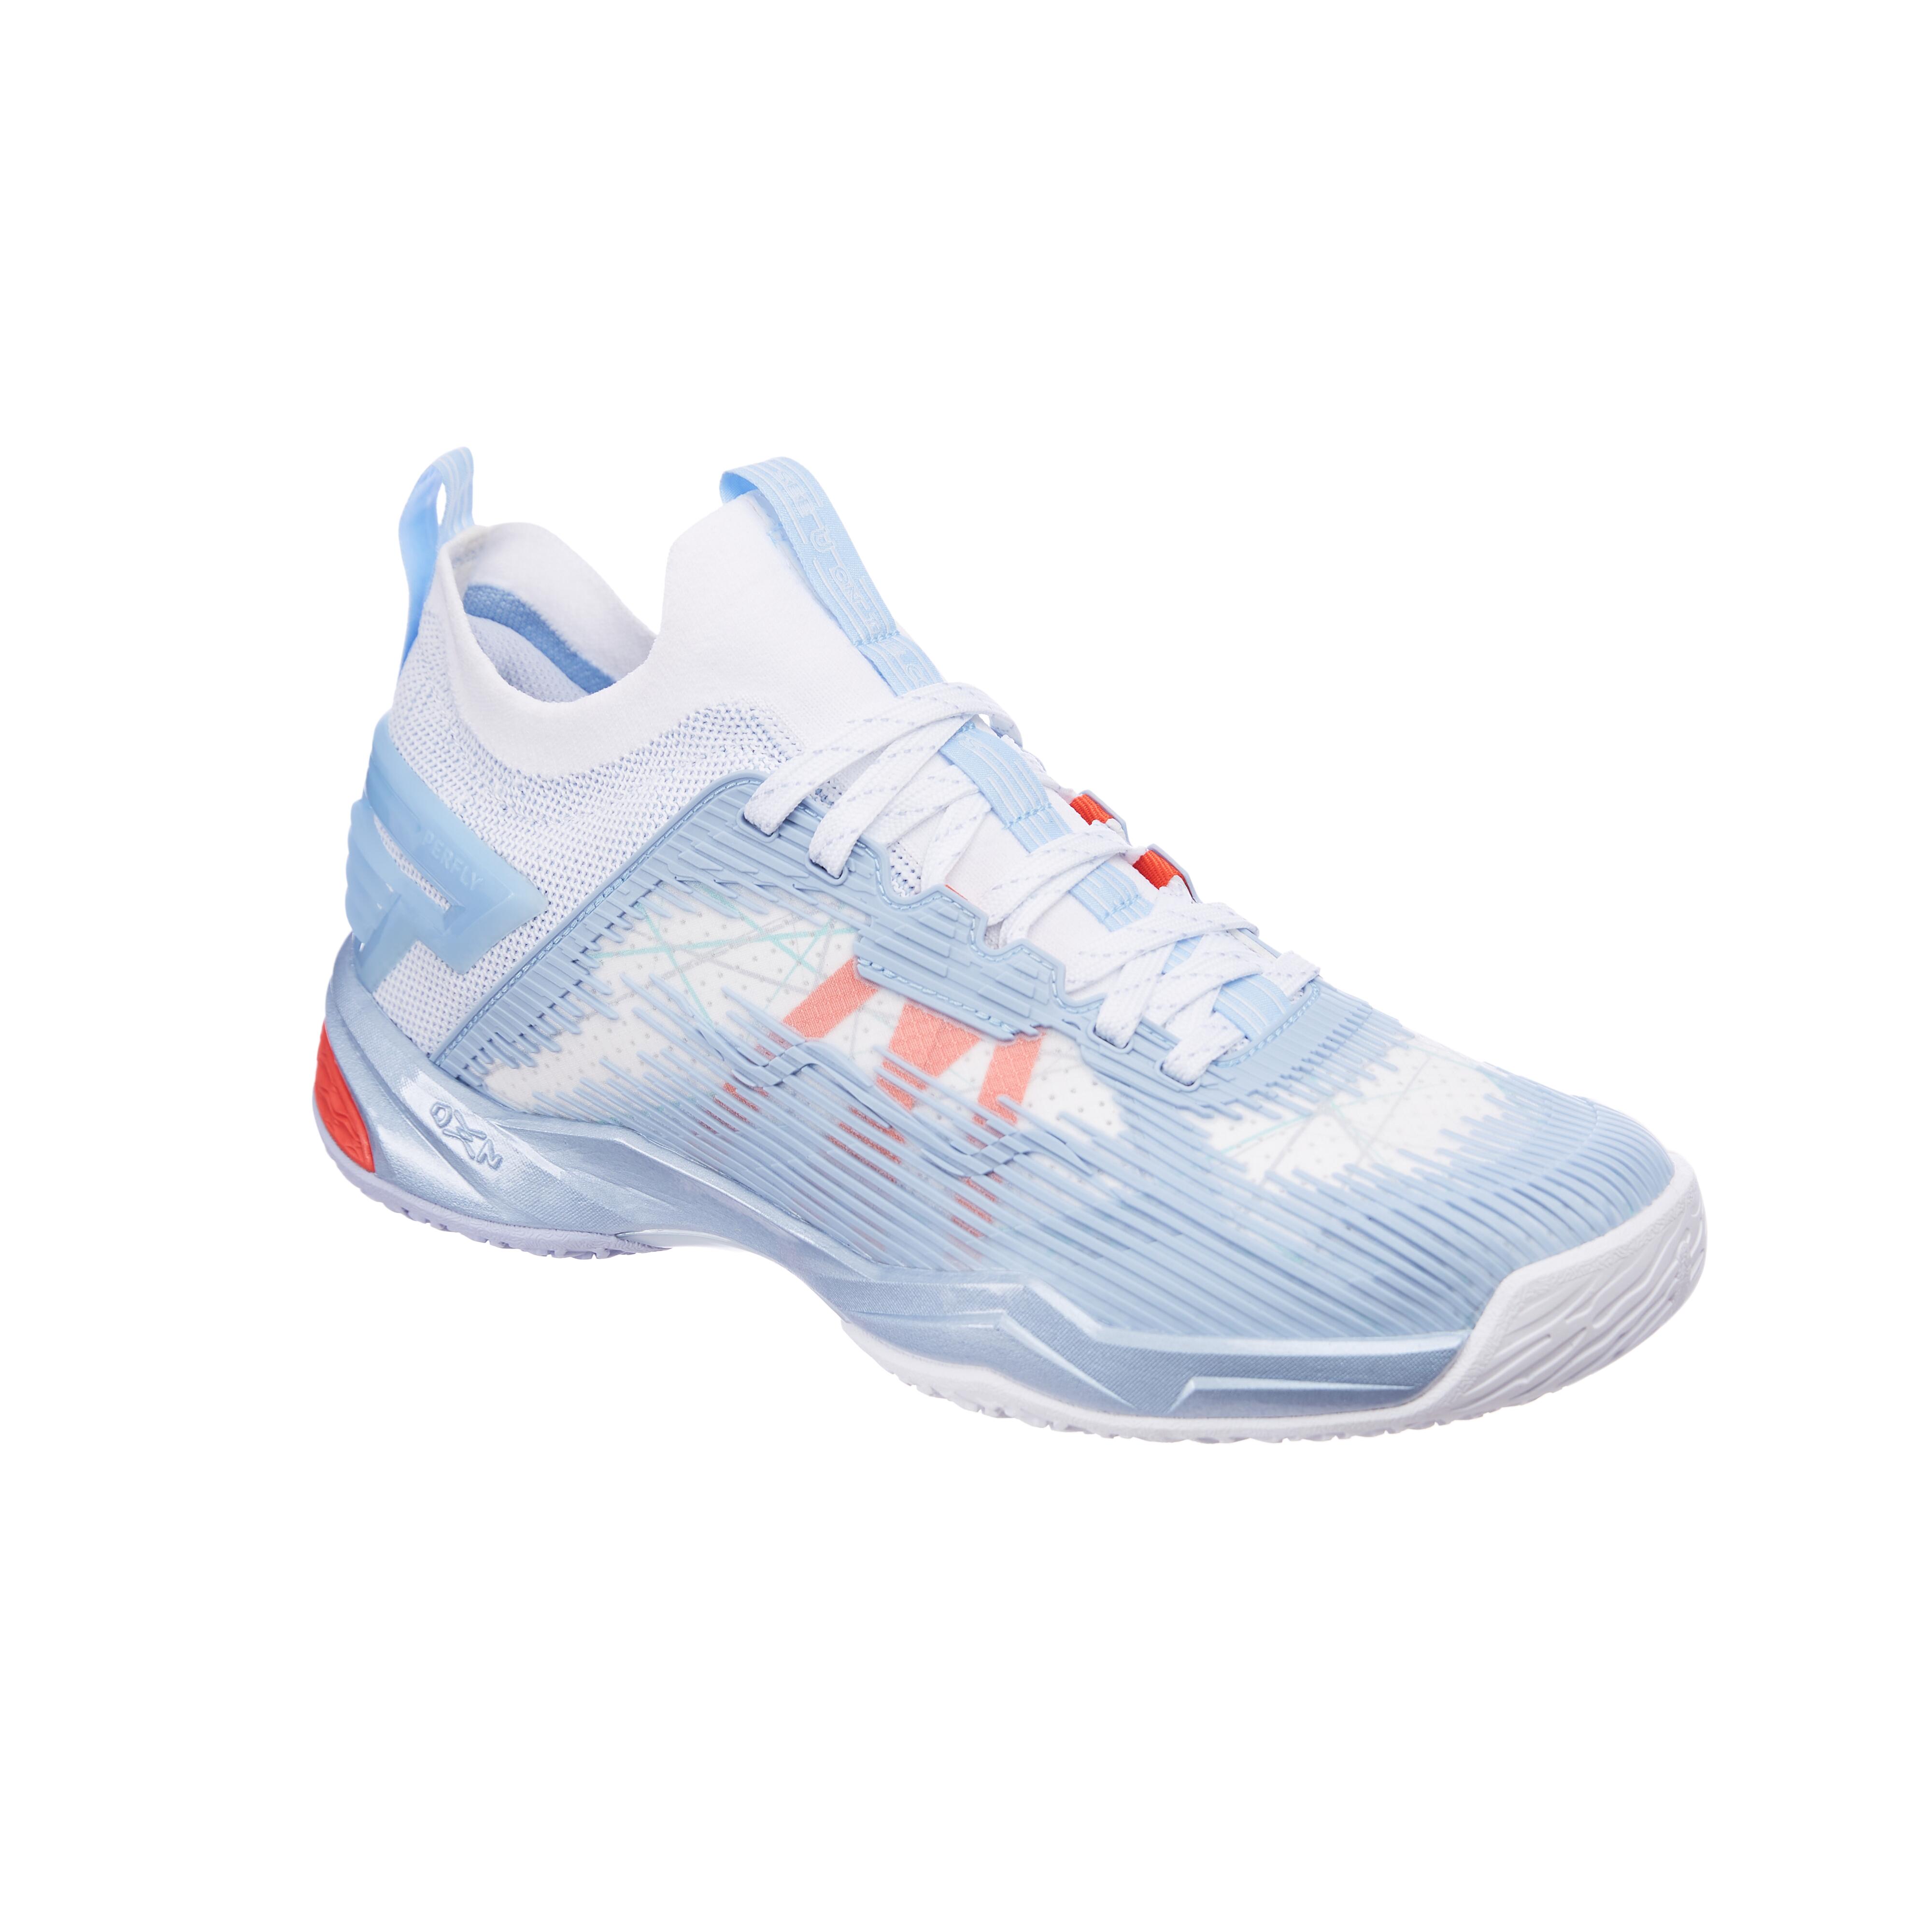 Women Badminton Shoes Bs 990 Grey Light Blue